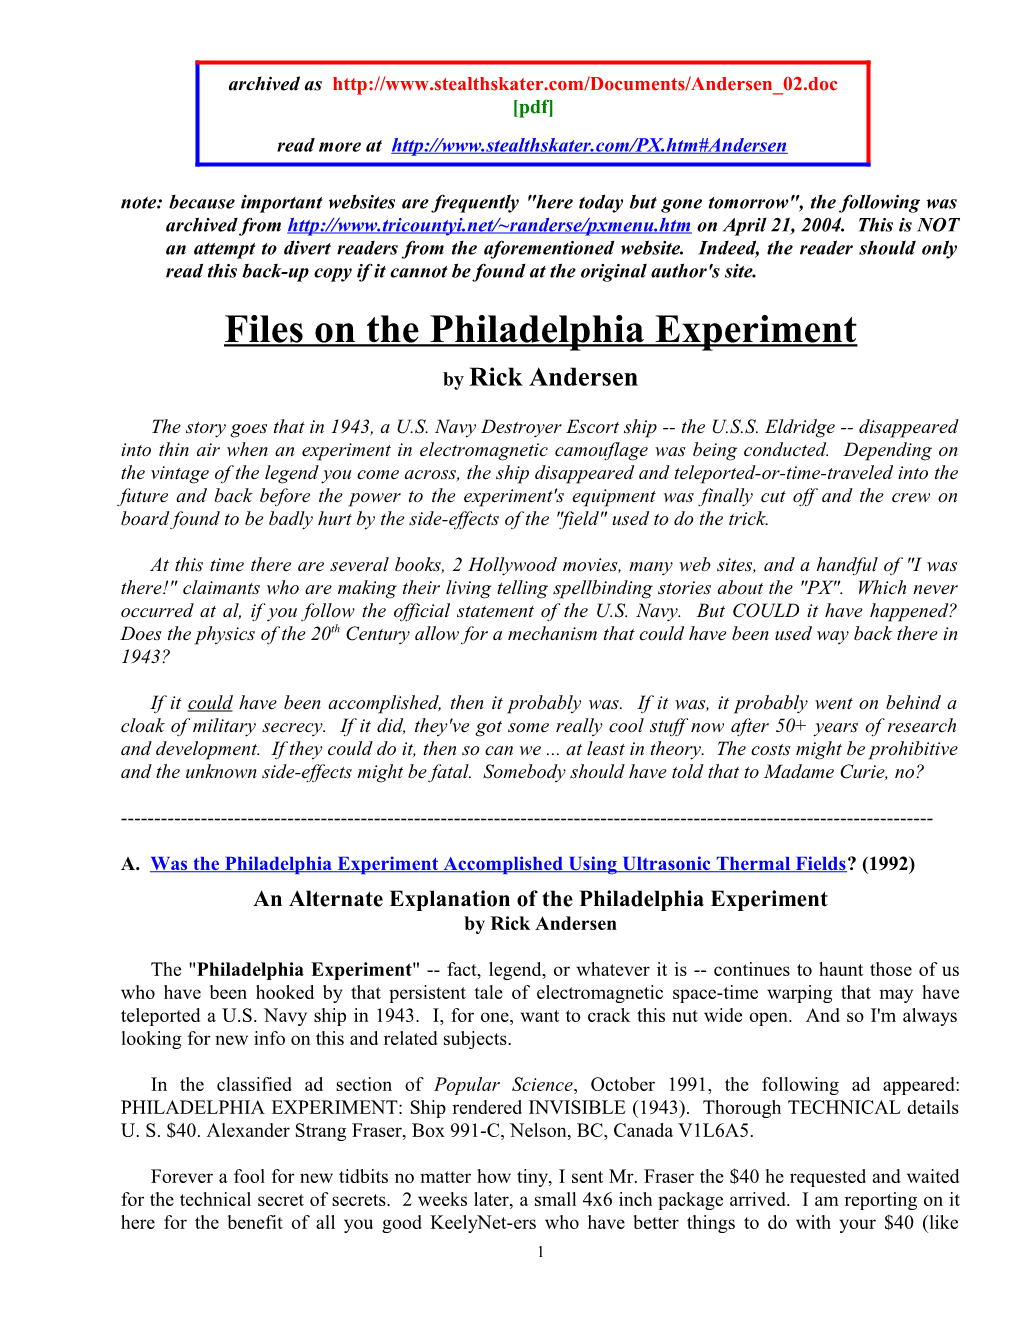 Files on the Philadelphia Experiment